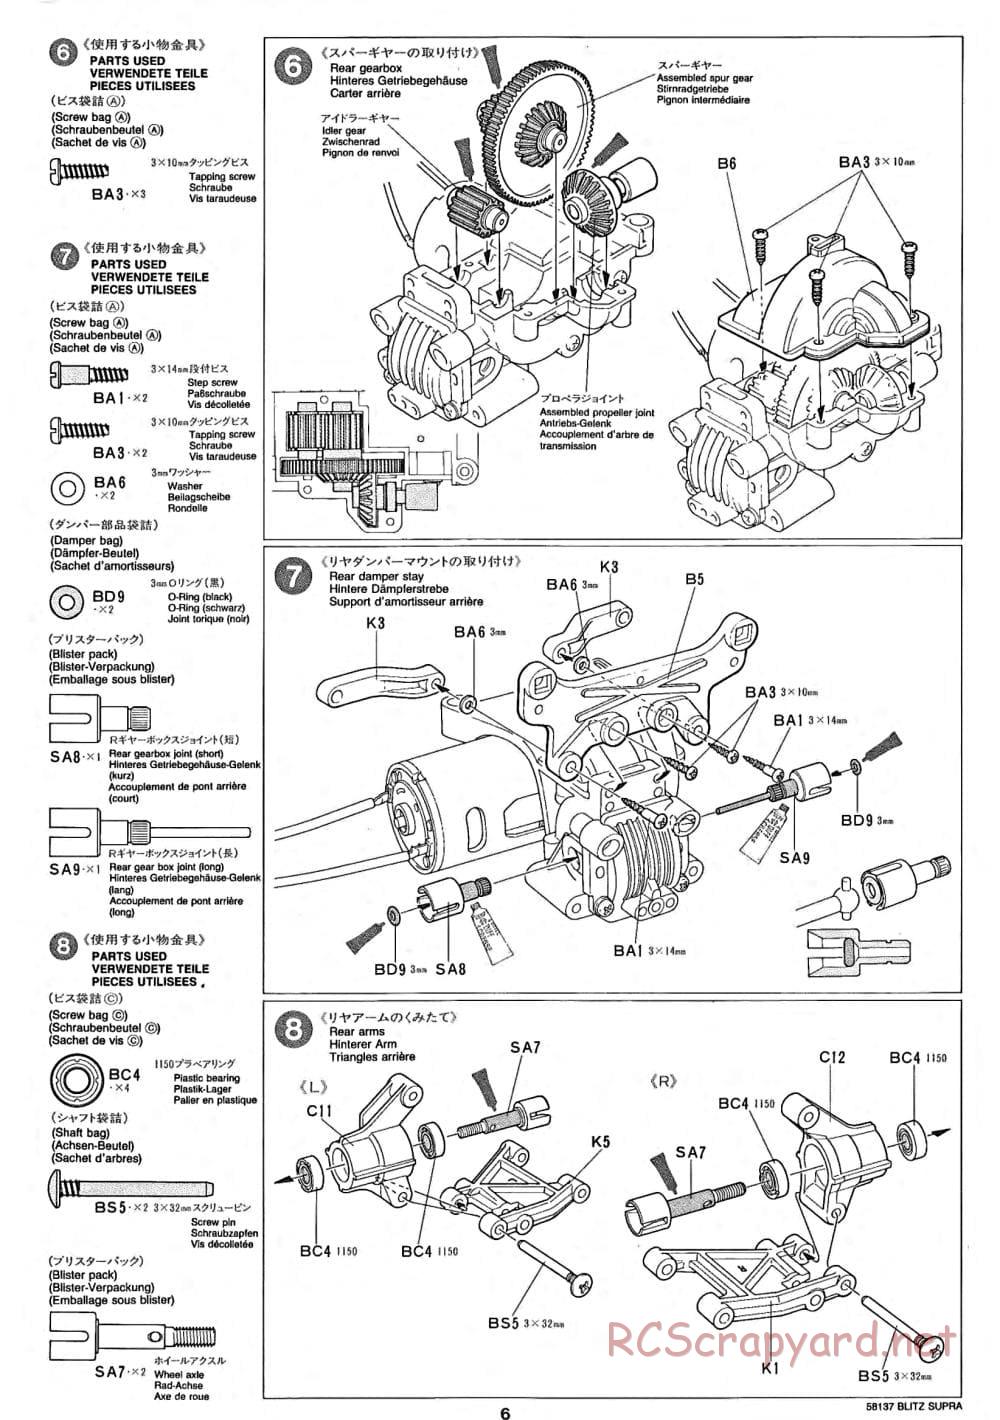 Tamiya - Blitz Toyota Supra Gr.N - TA-02 Chassis - Manual - Page 6